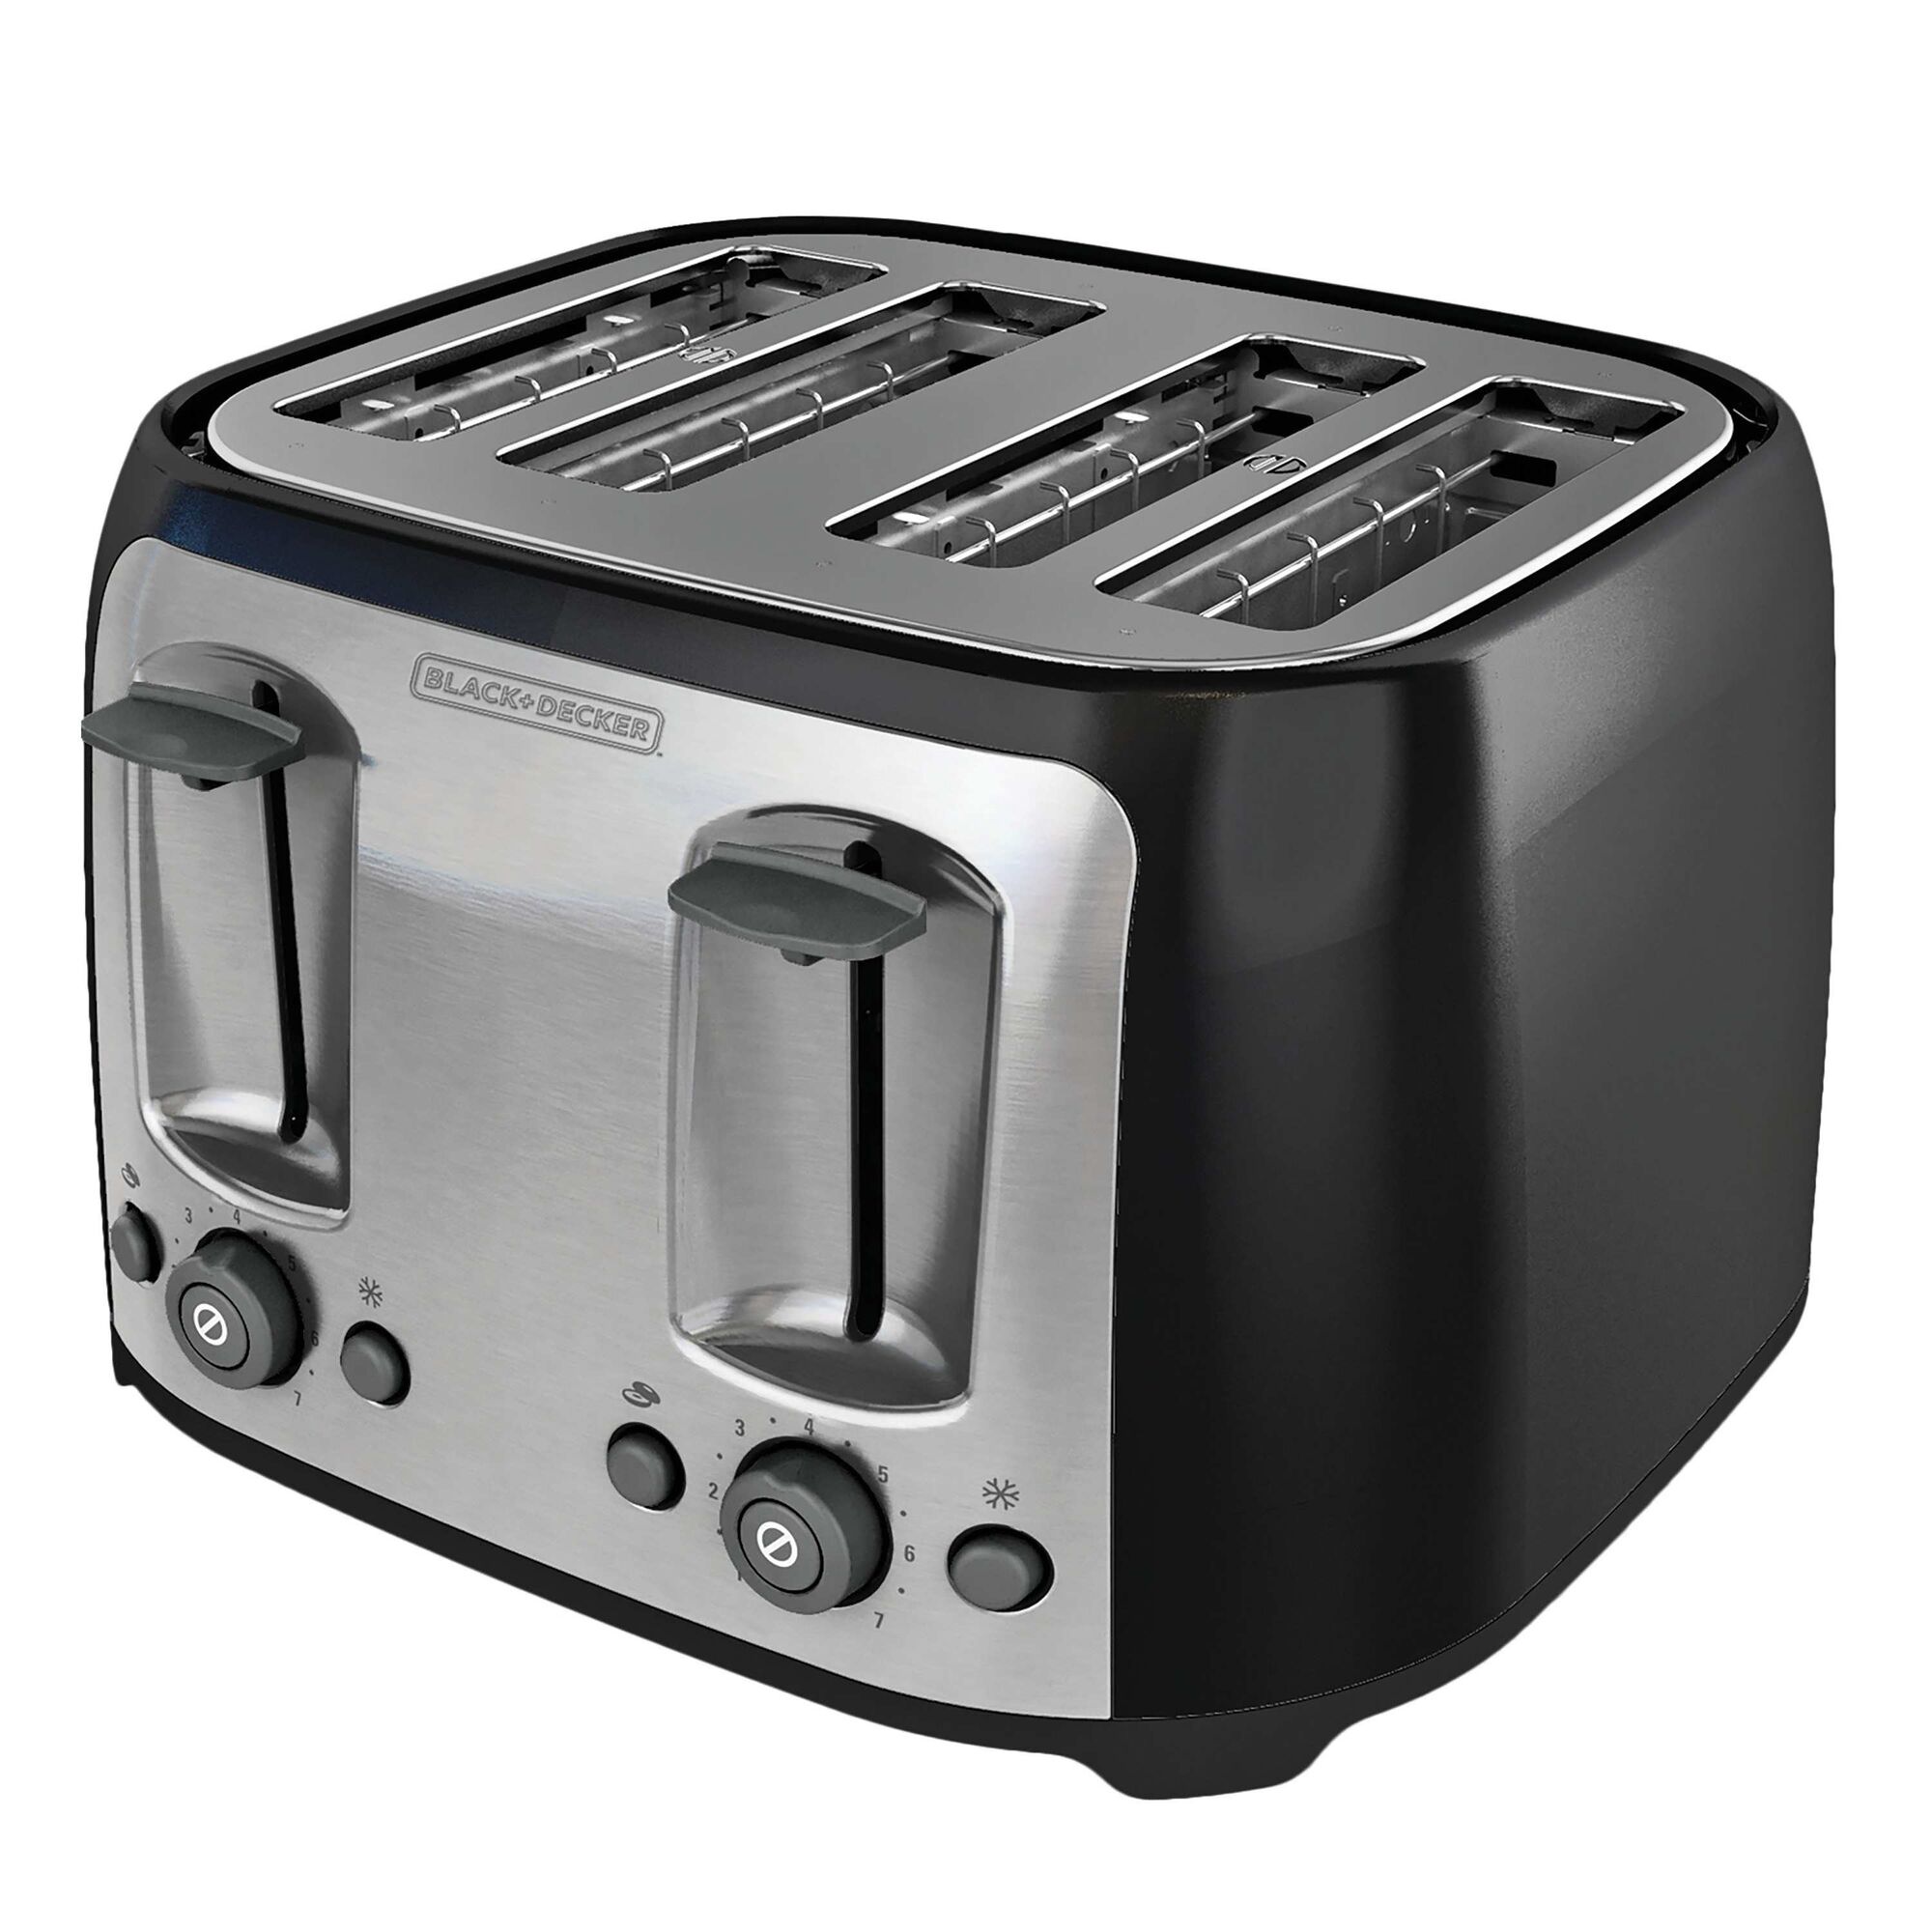 Profile of 4 slice toaster.